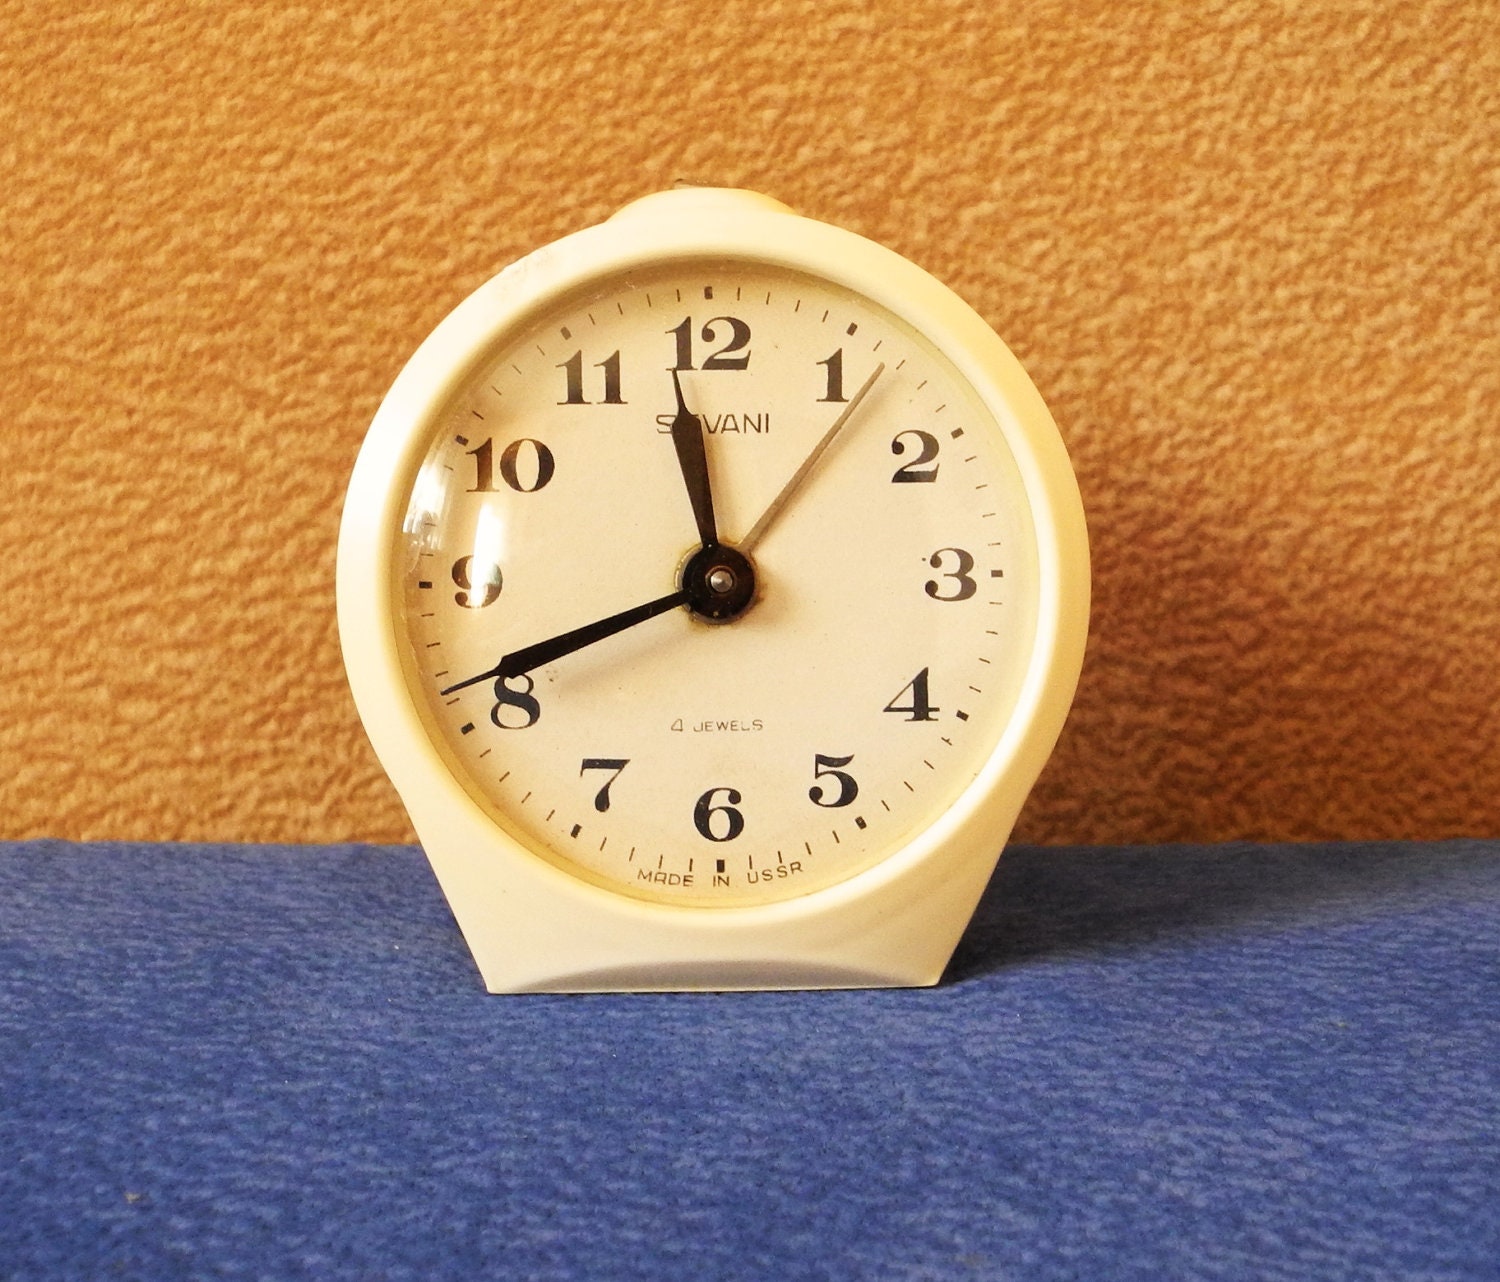 Vintage tabletop alarm clock SEVANI alarm clock from USSR, watch, timer